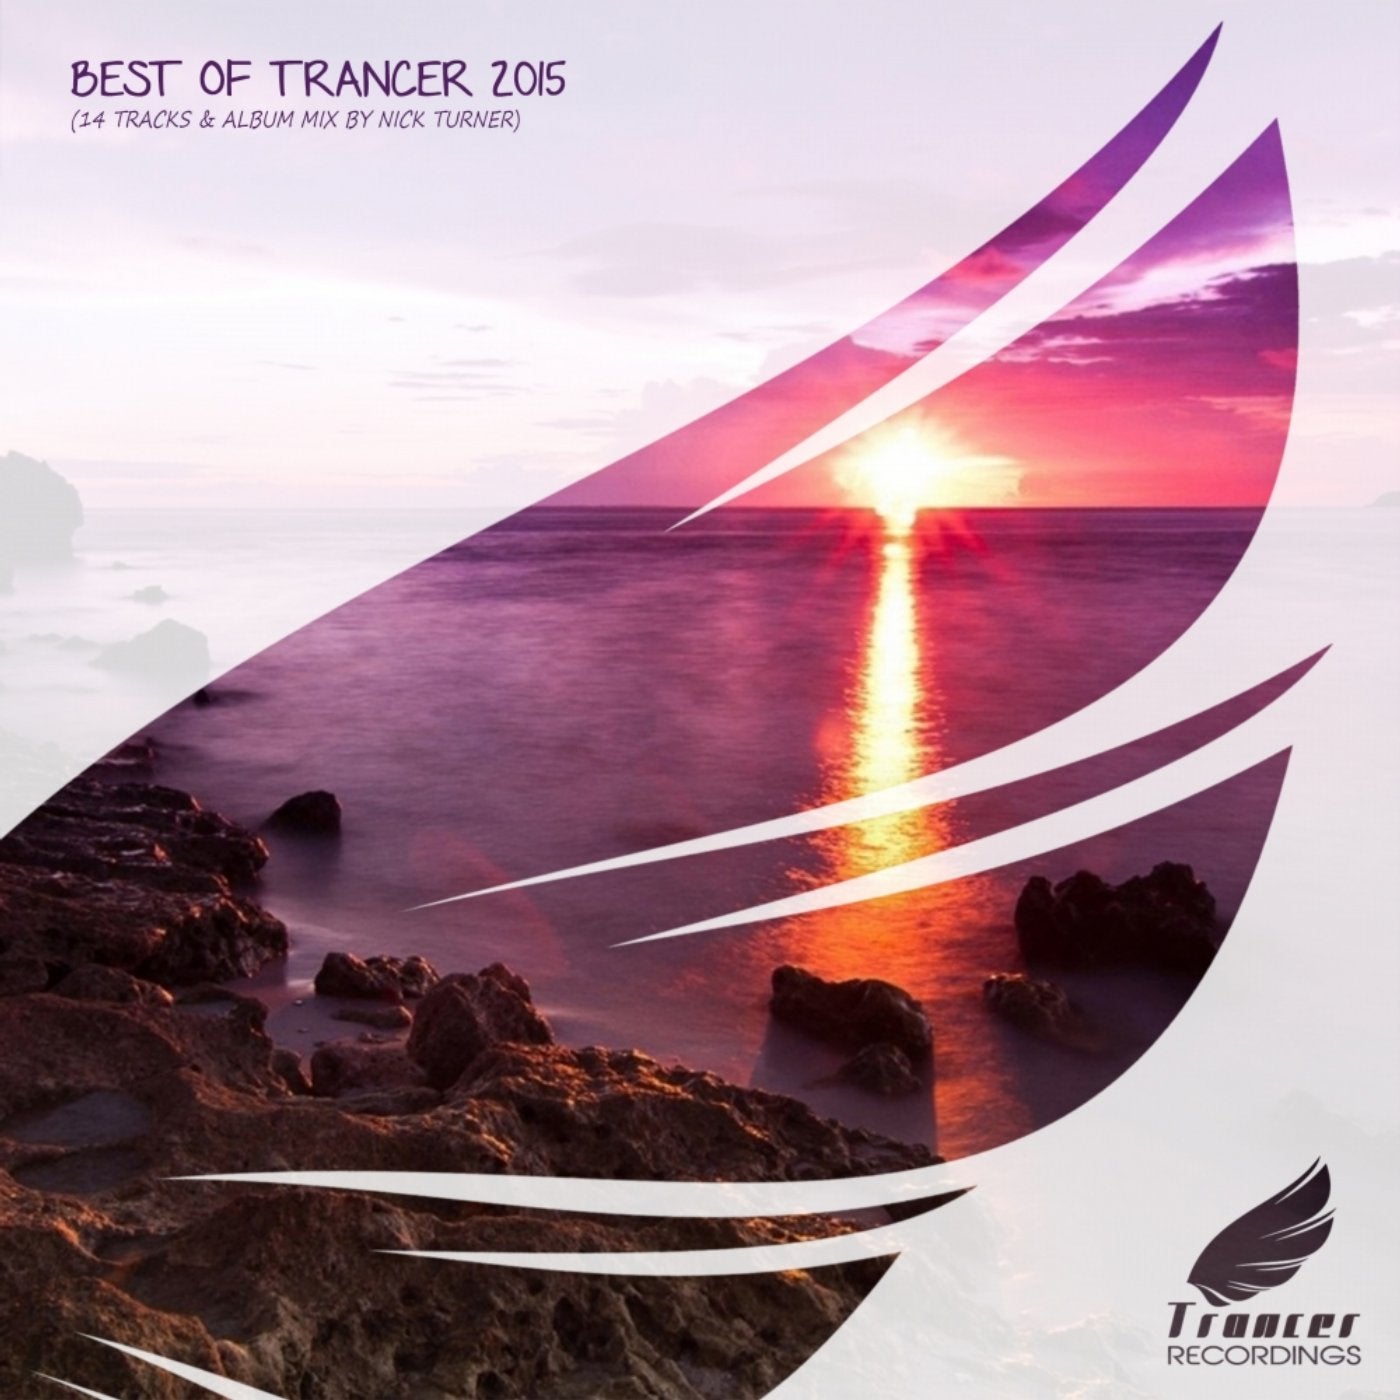 Best Of Trancer 2015 от Trancer Recordings на Beatport.